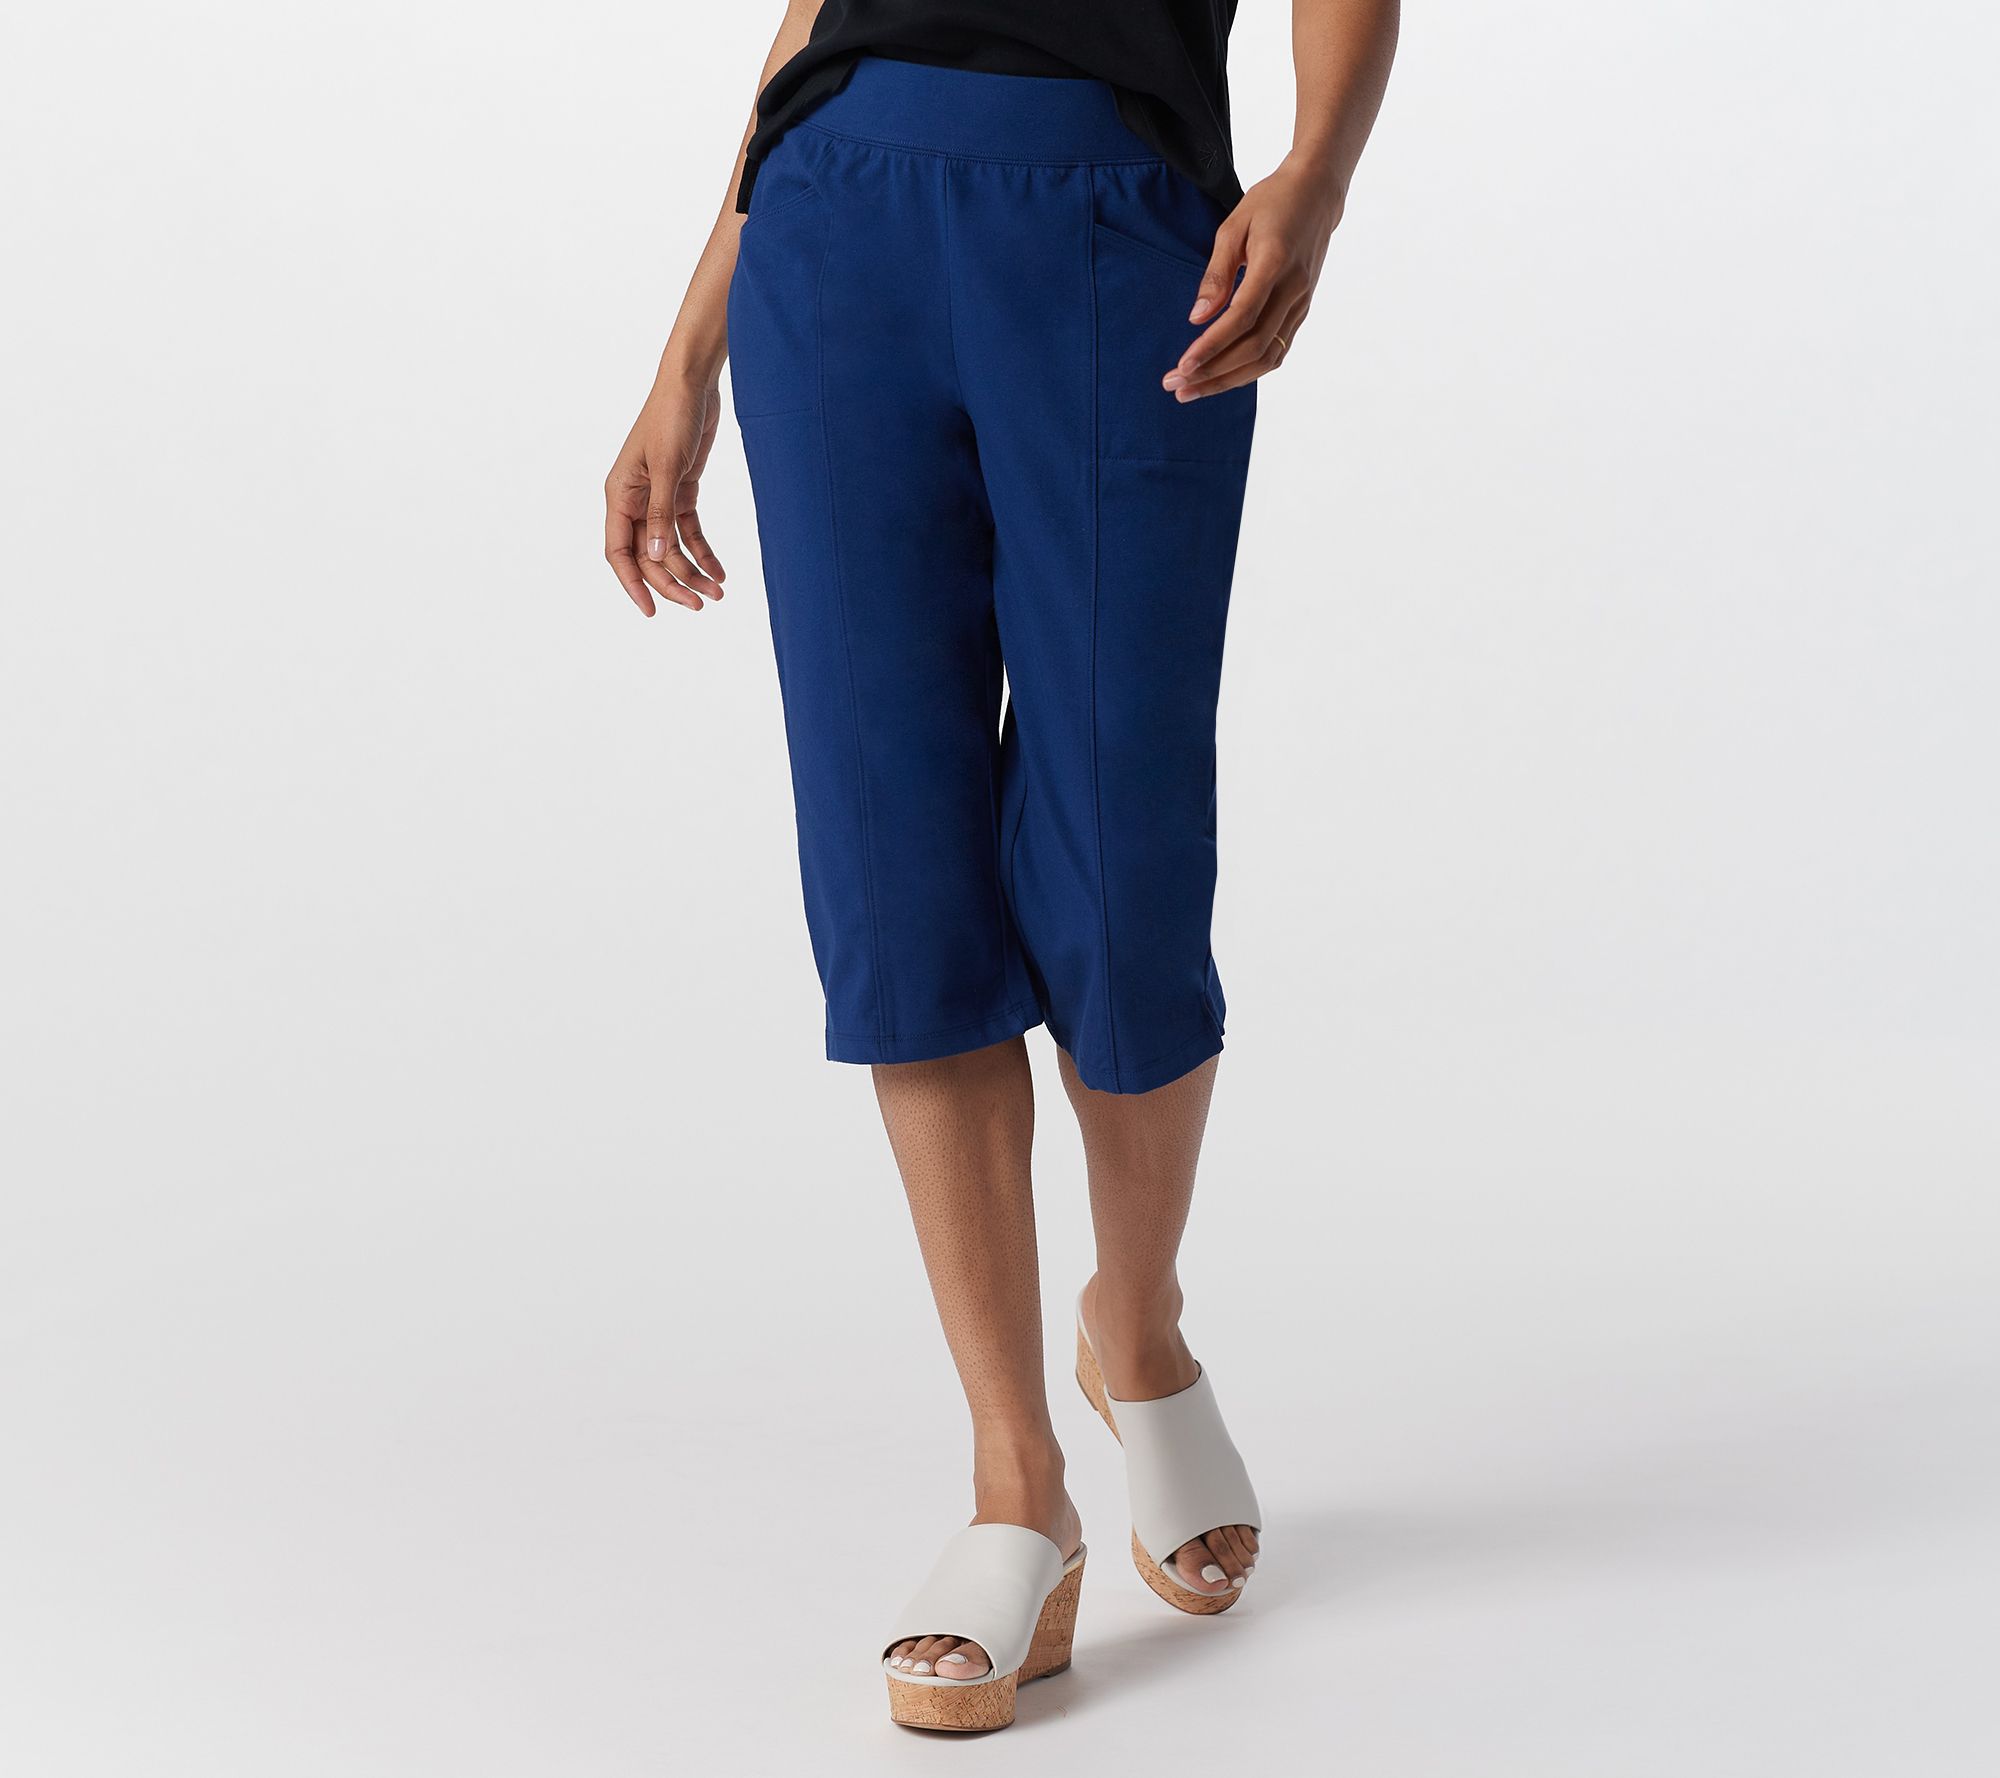 Short capri stretch pants with pockets - black, white, navy blue